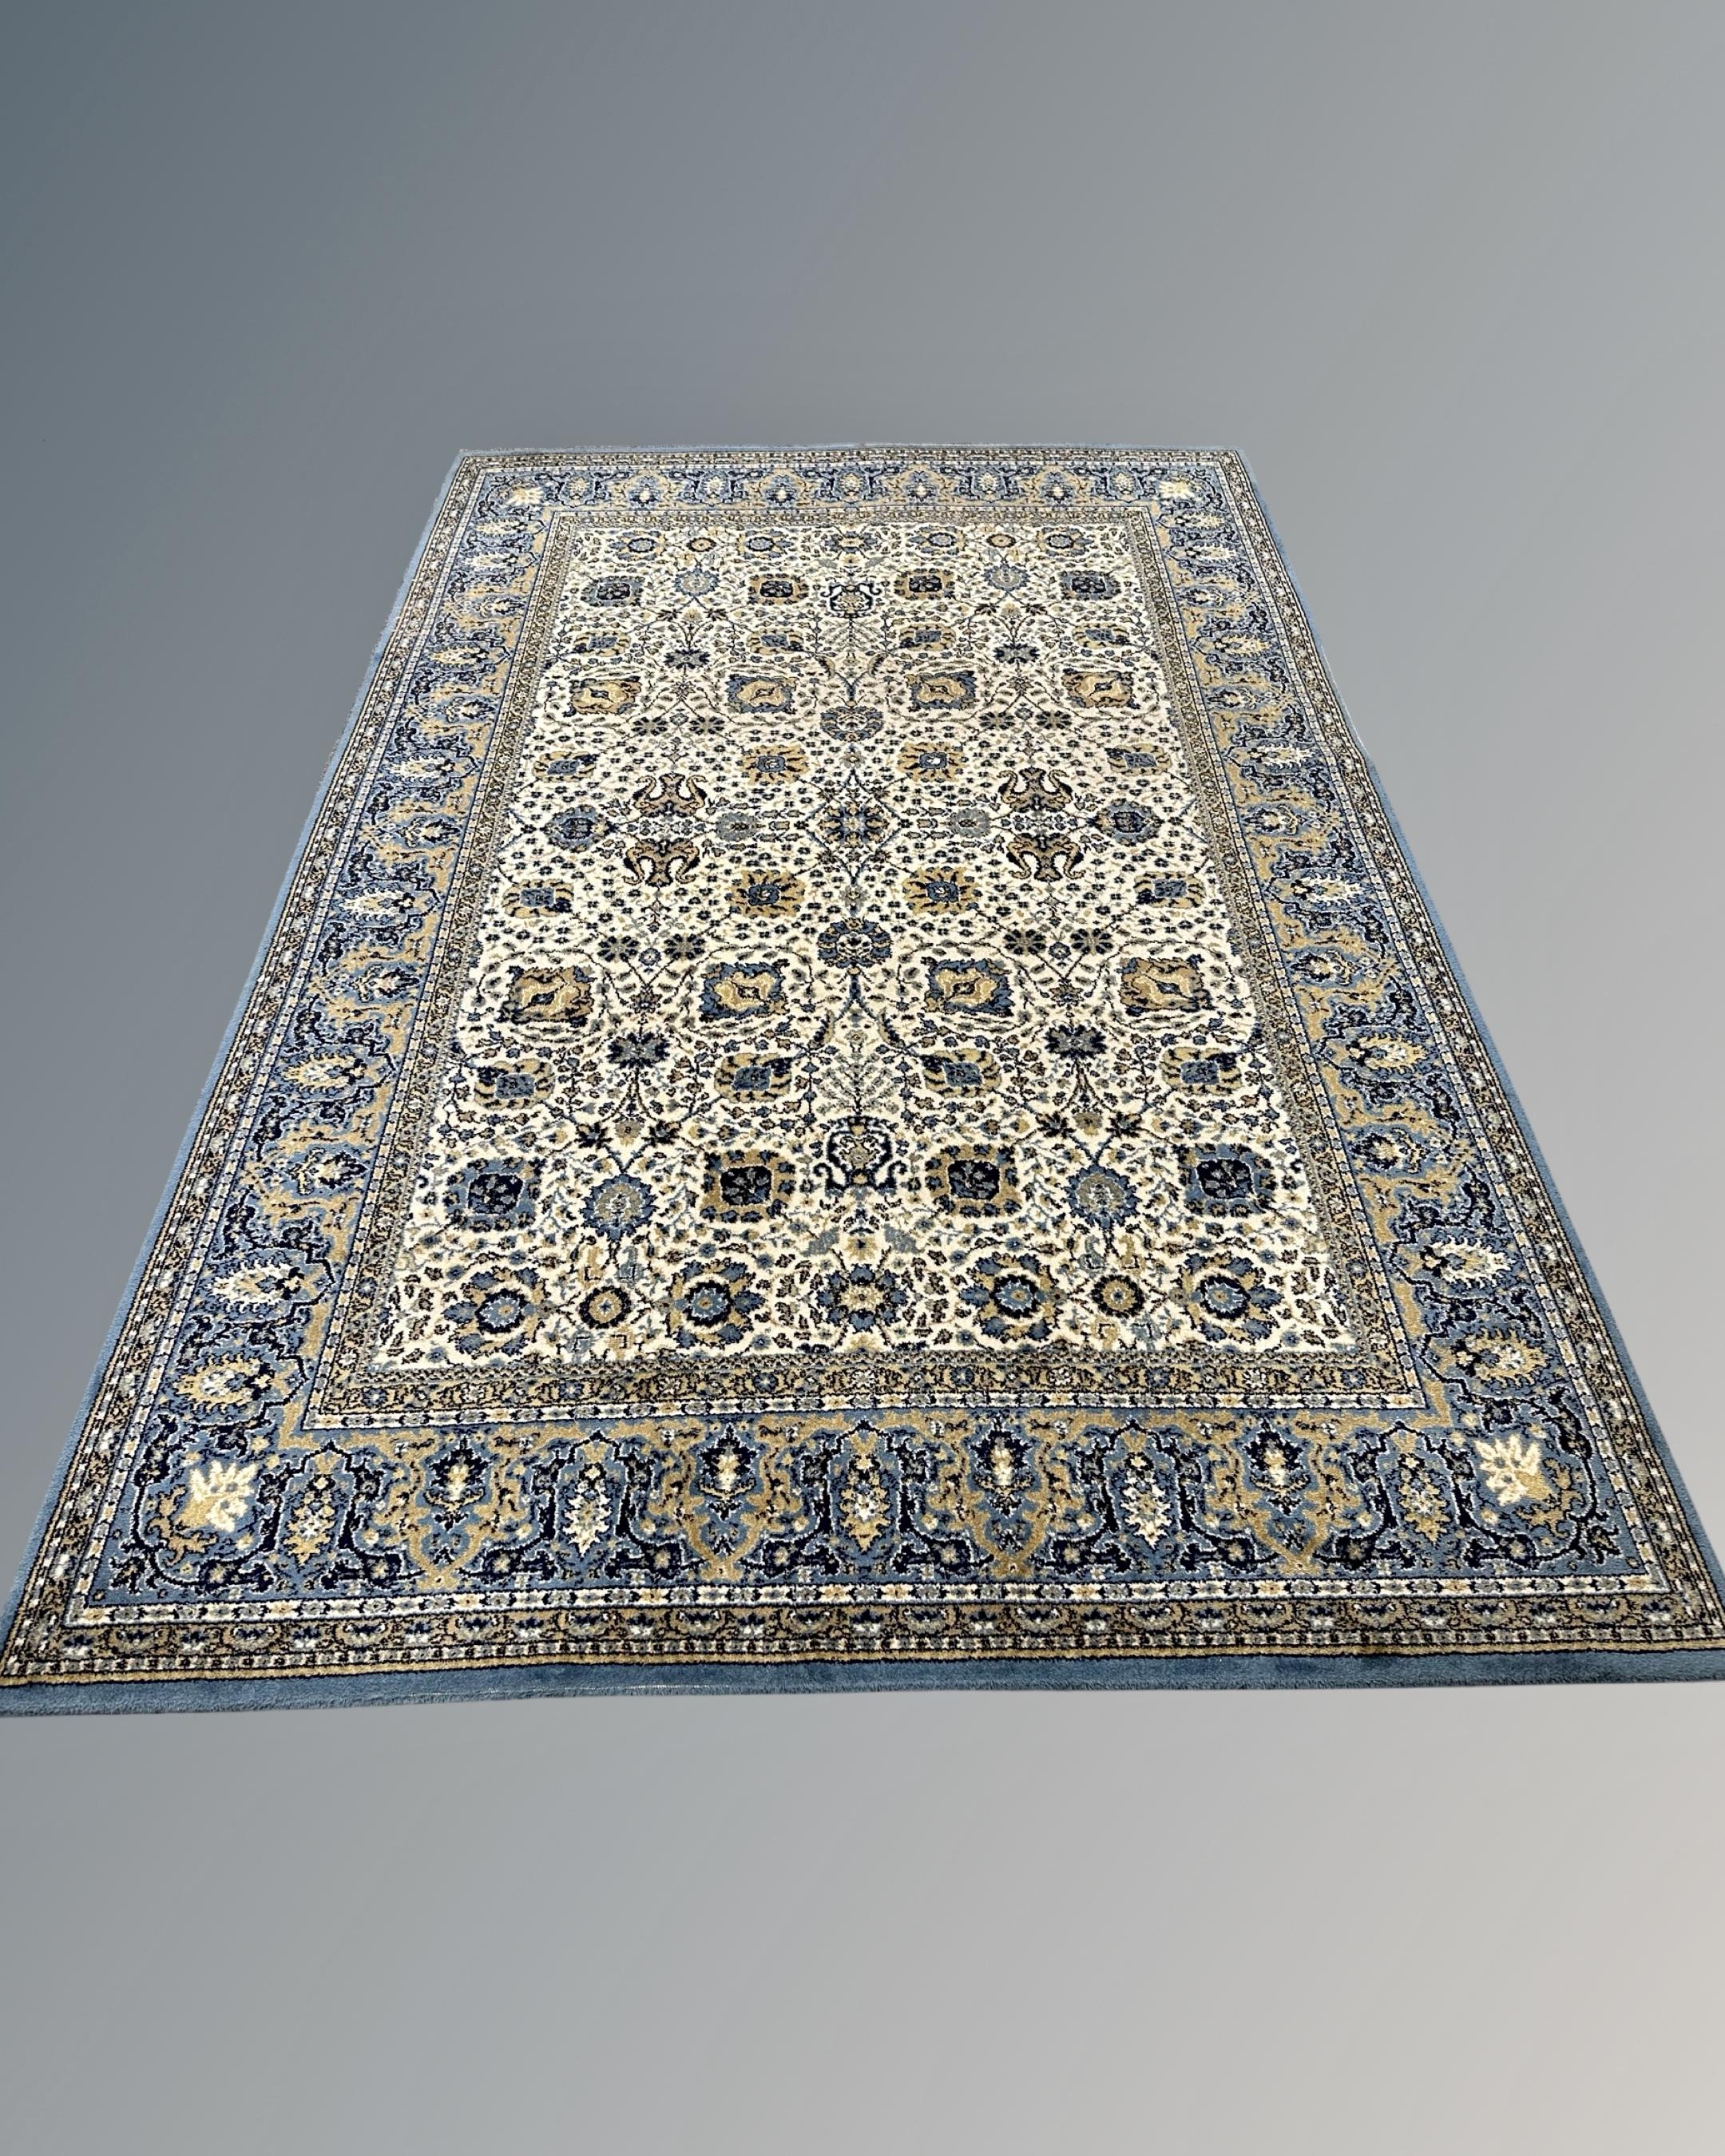 A machine-made Tabriz design rug, 201cm by 297cm.